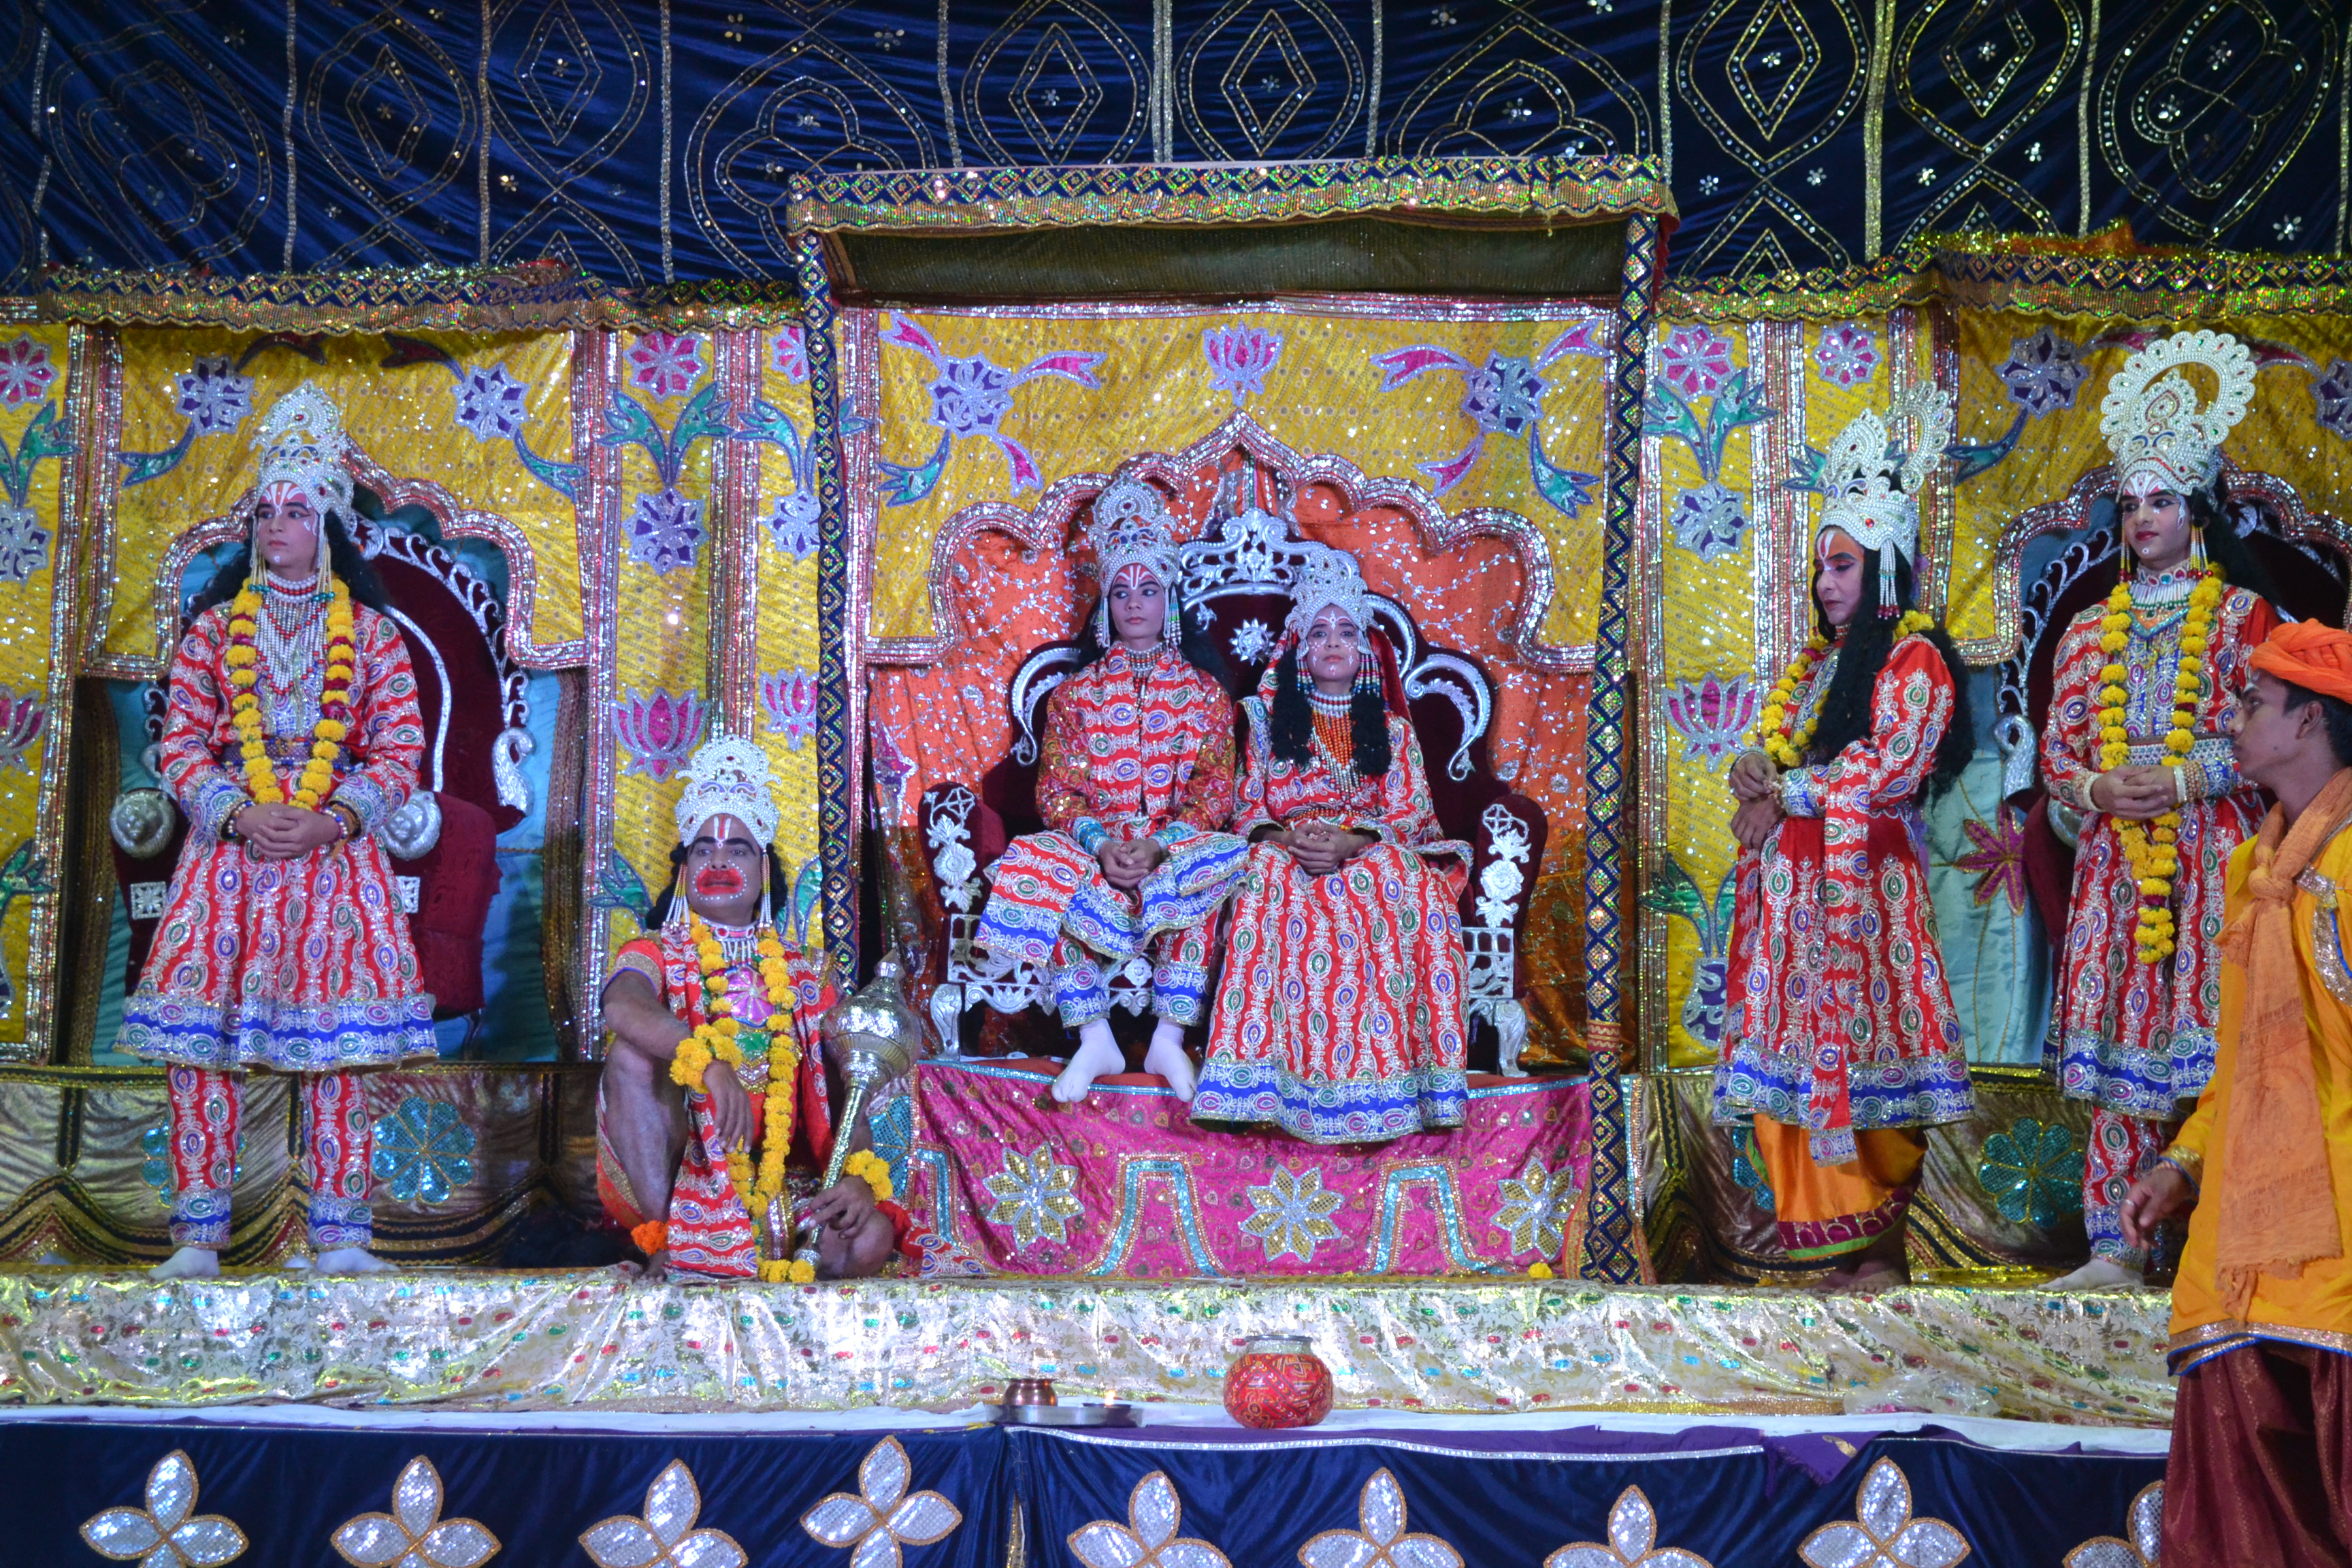 ramleela 2019 : प्रभु श्रीराम ने सम्भाला अयोध्या का राजपाट- देवलोक से हुई पुष्पवर्षा